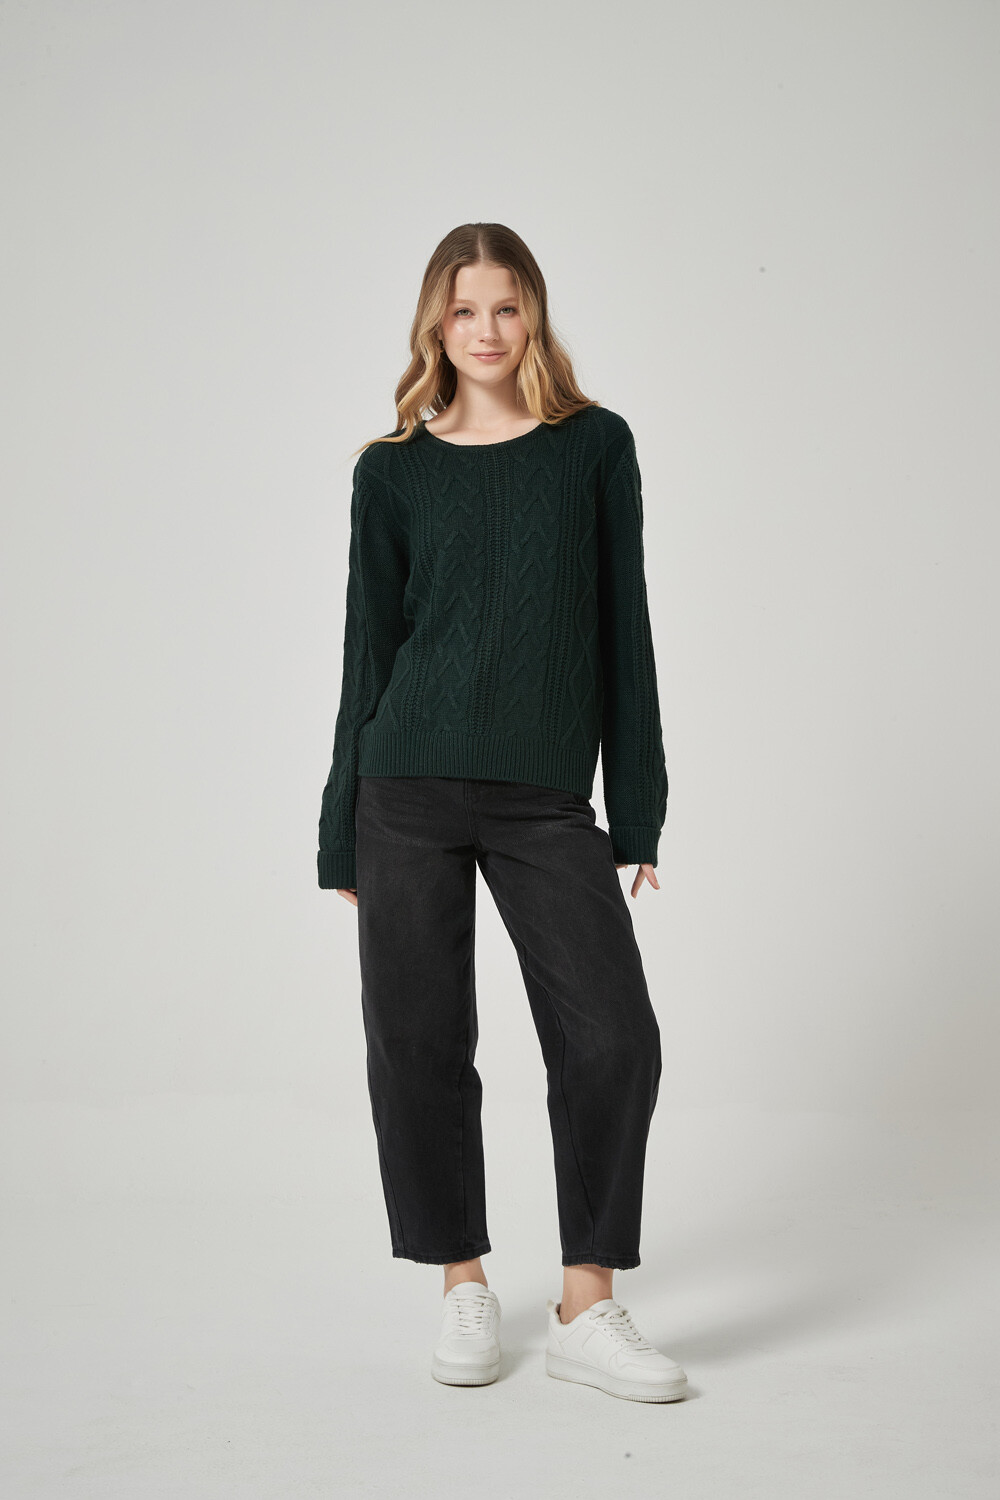 Sweater Focio Verde Oscuro